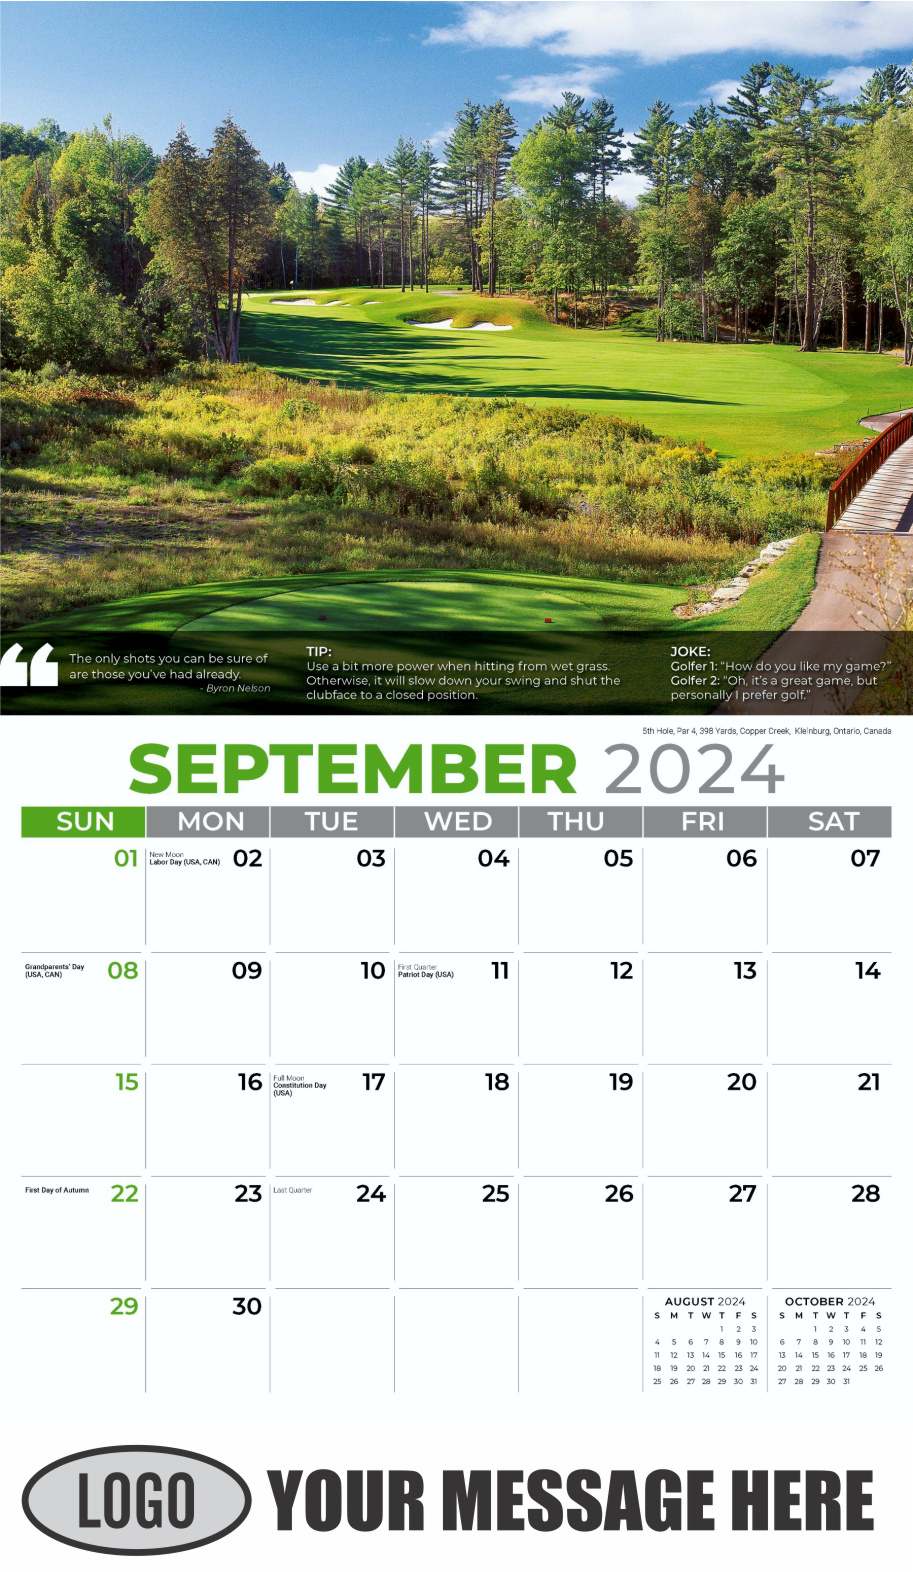 Golf Tips 2024 Business Promo Calendar - September